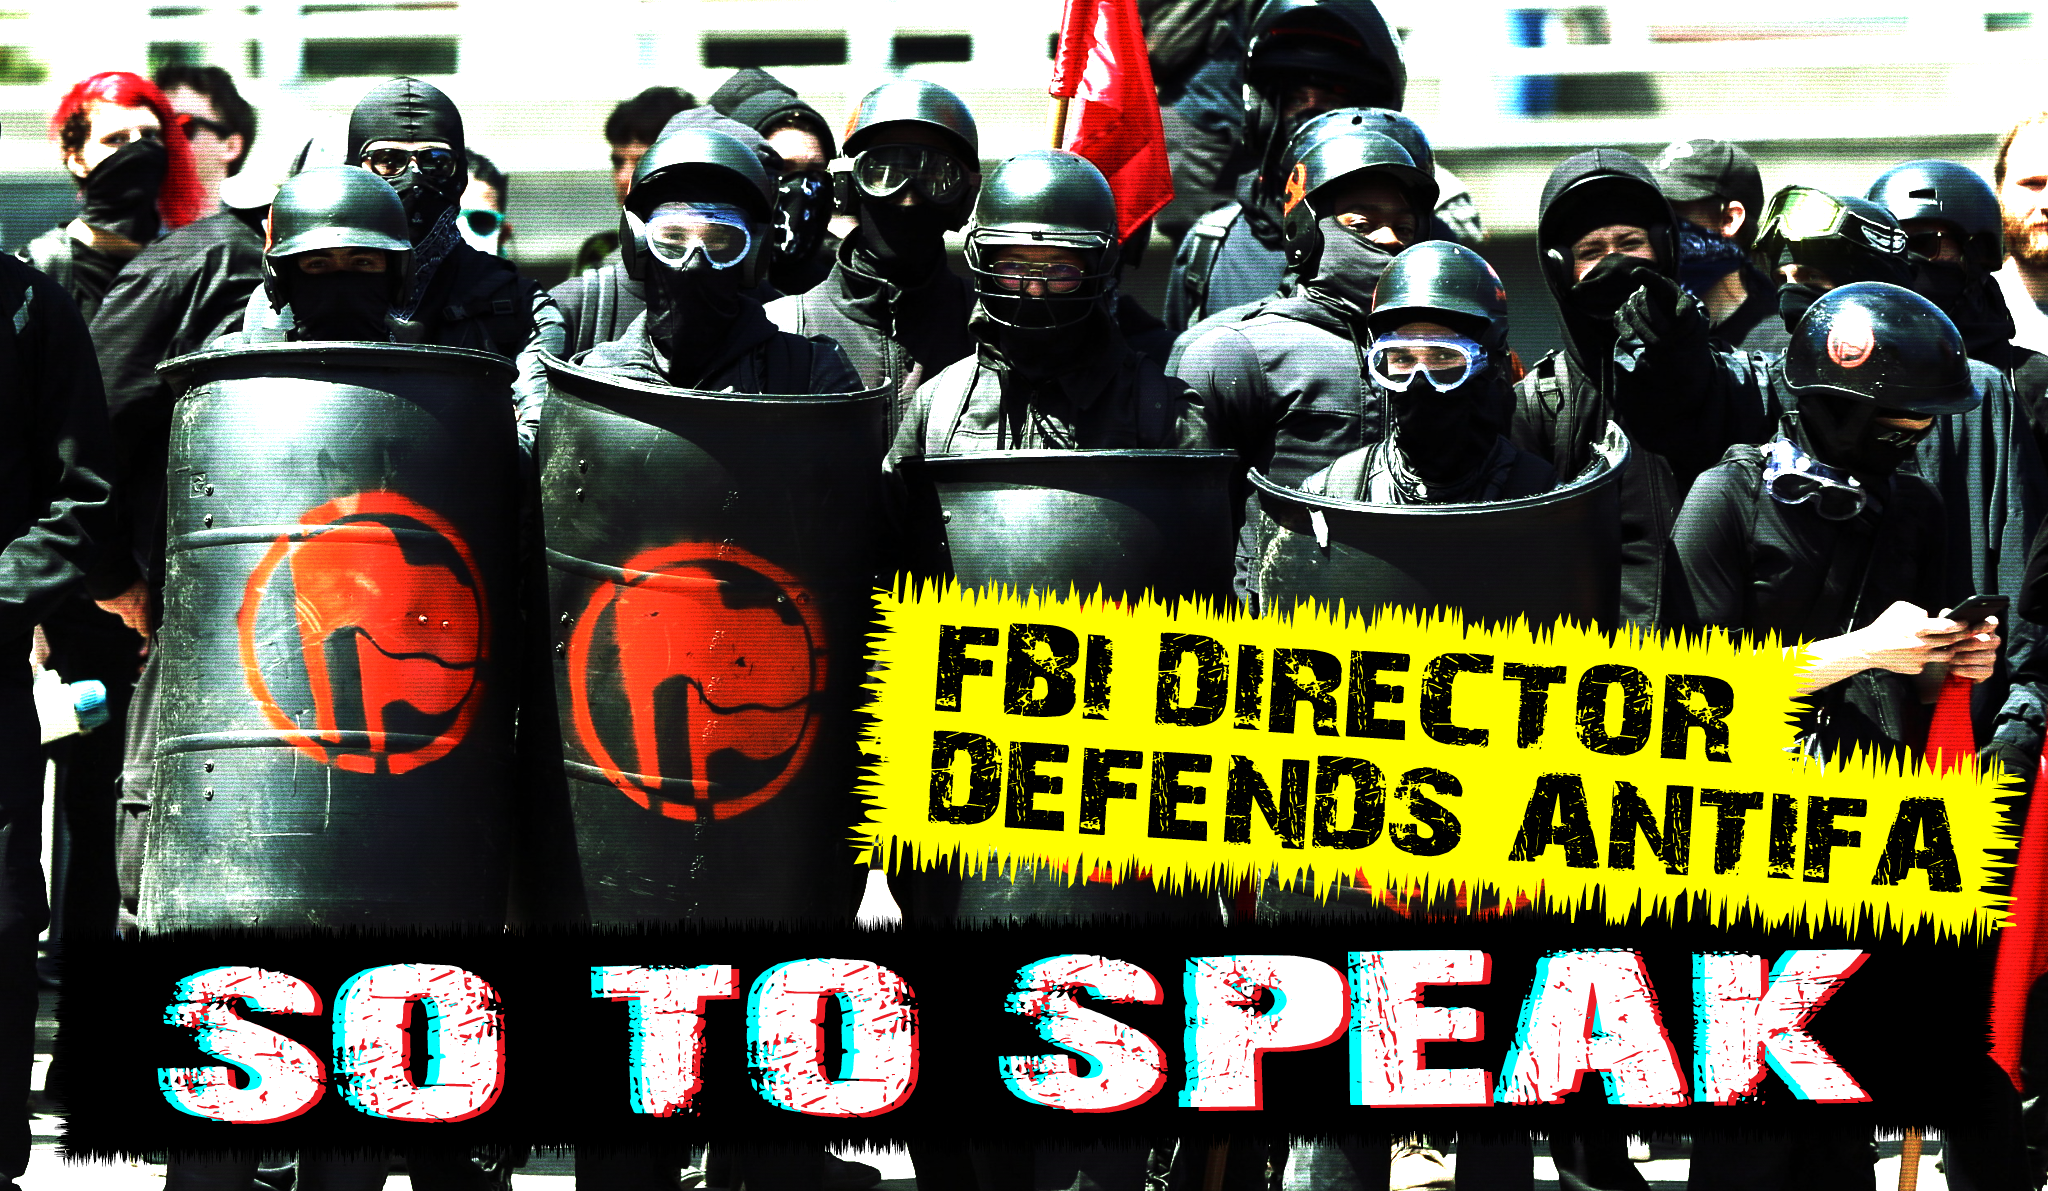 Antifa does not exist. Just an ideology. FBI director Chris Wray